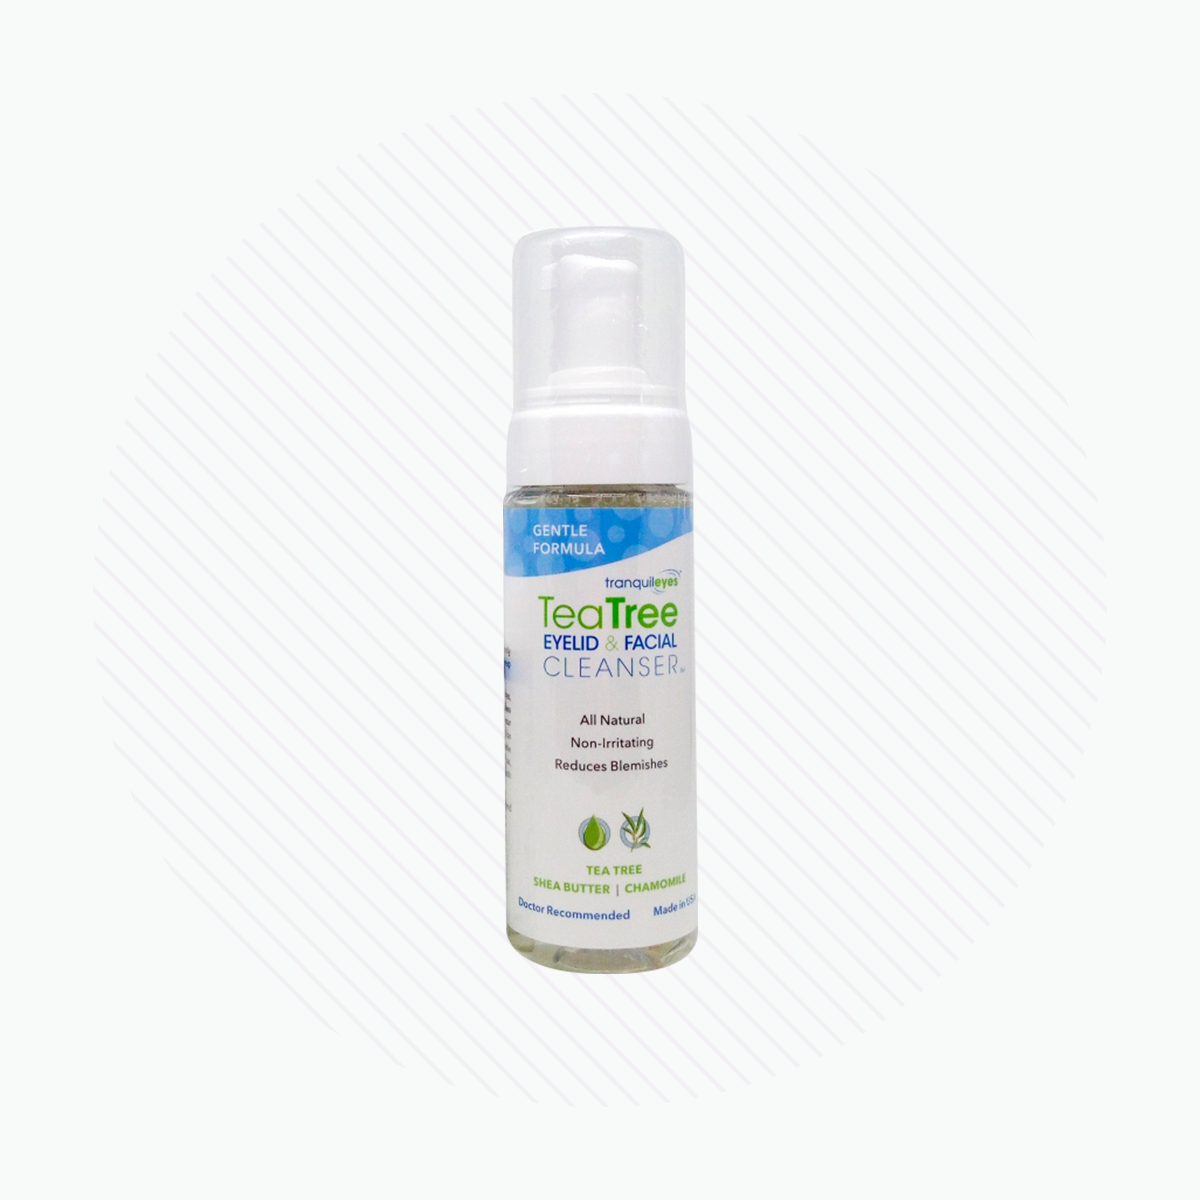 Tranquil Eyes - Gentle Formula 1% Tea Tree Eyelid & Facial Cleanser (2 Sizes)